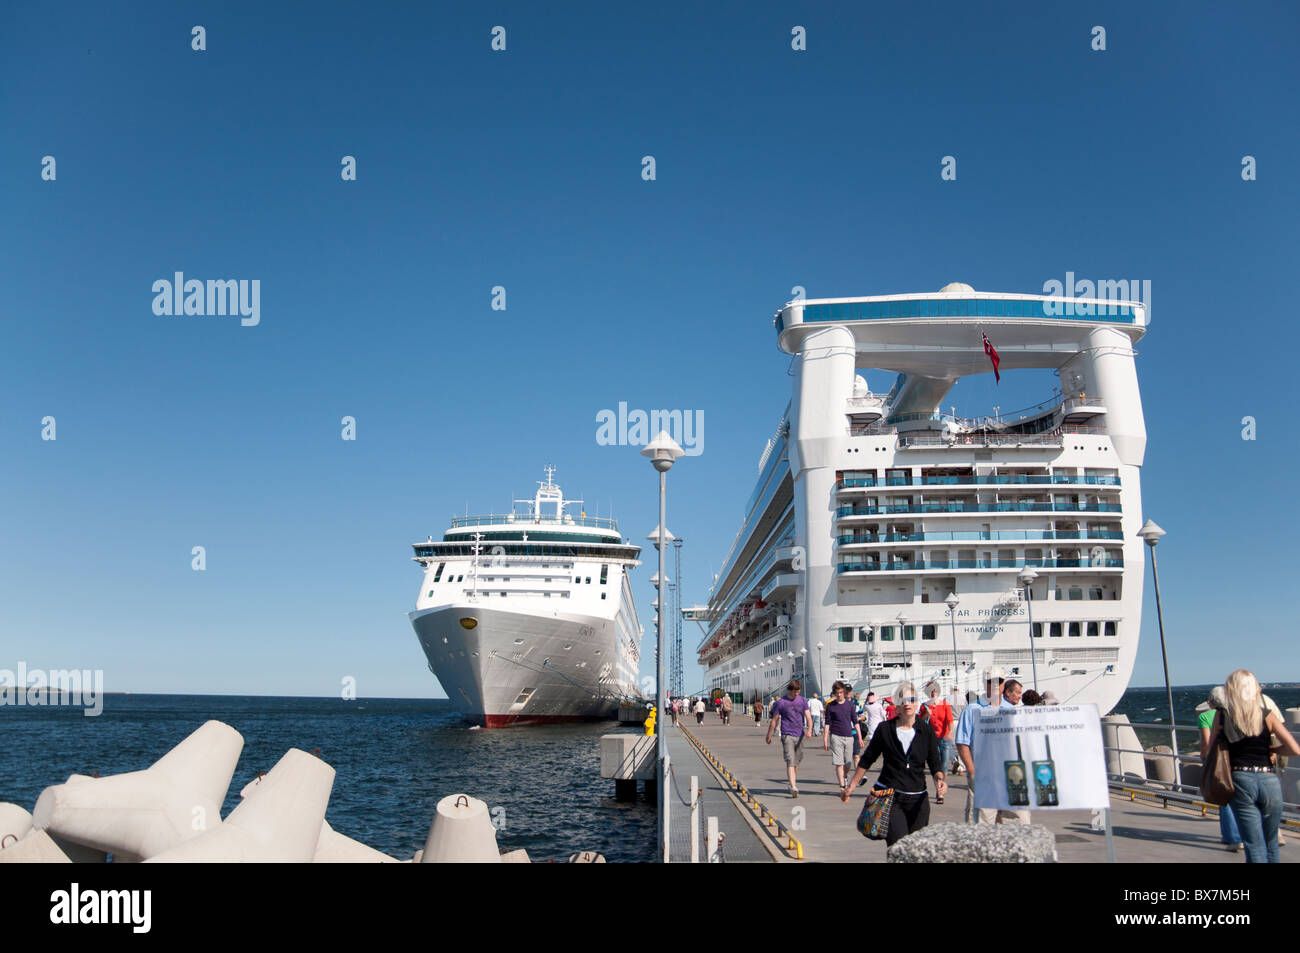 https://c8.alamy.com/comp/BX7M5H/a-photograph-of-the-po-cruise-ship-aurora-and-the-princess-cruises-BX7M5H.jpg